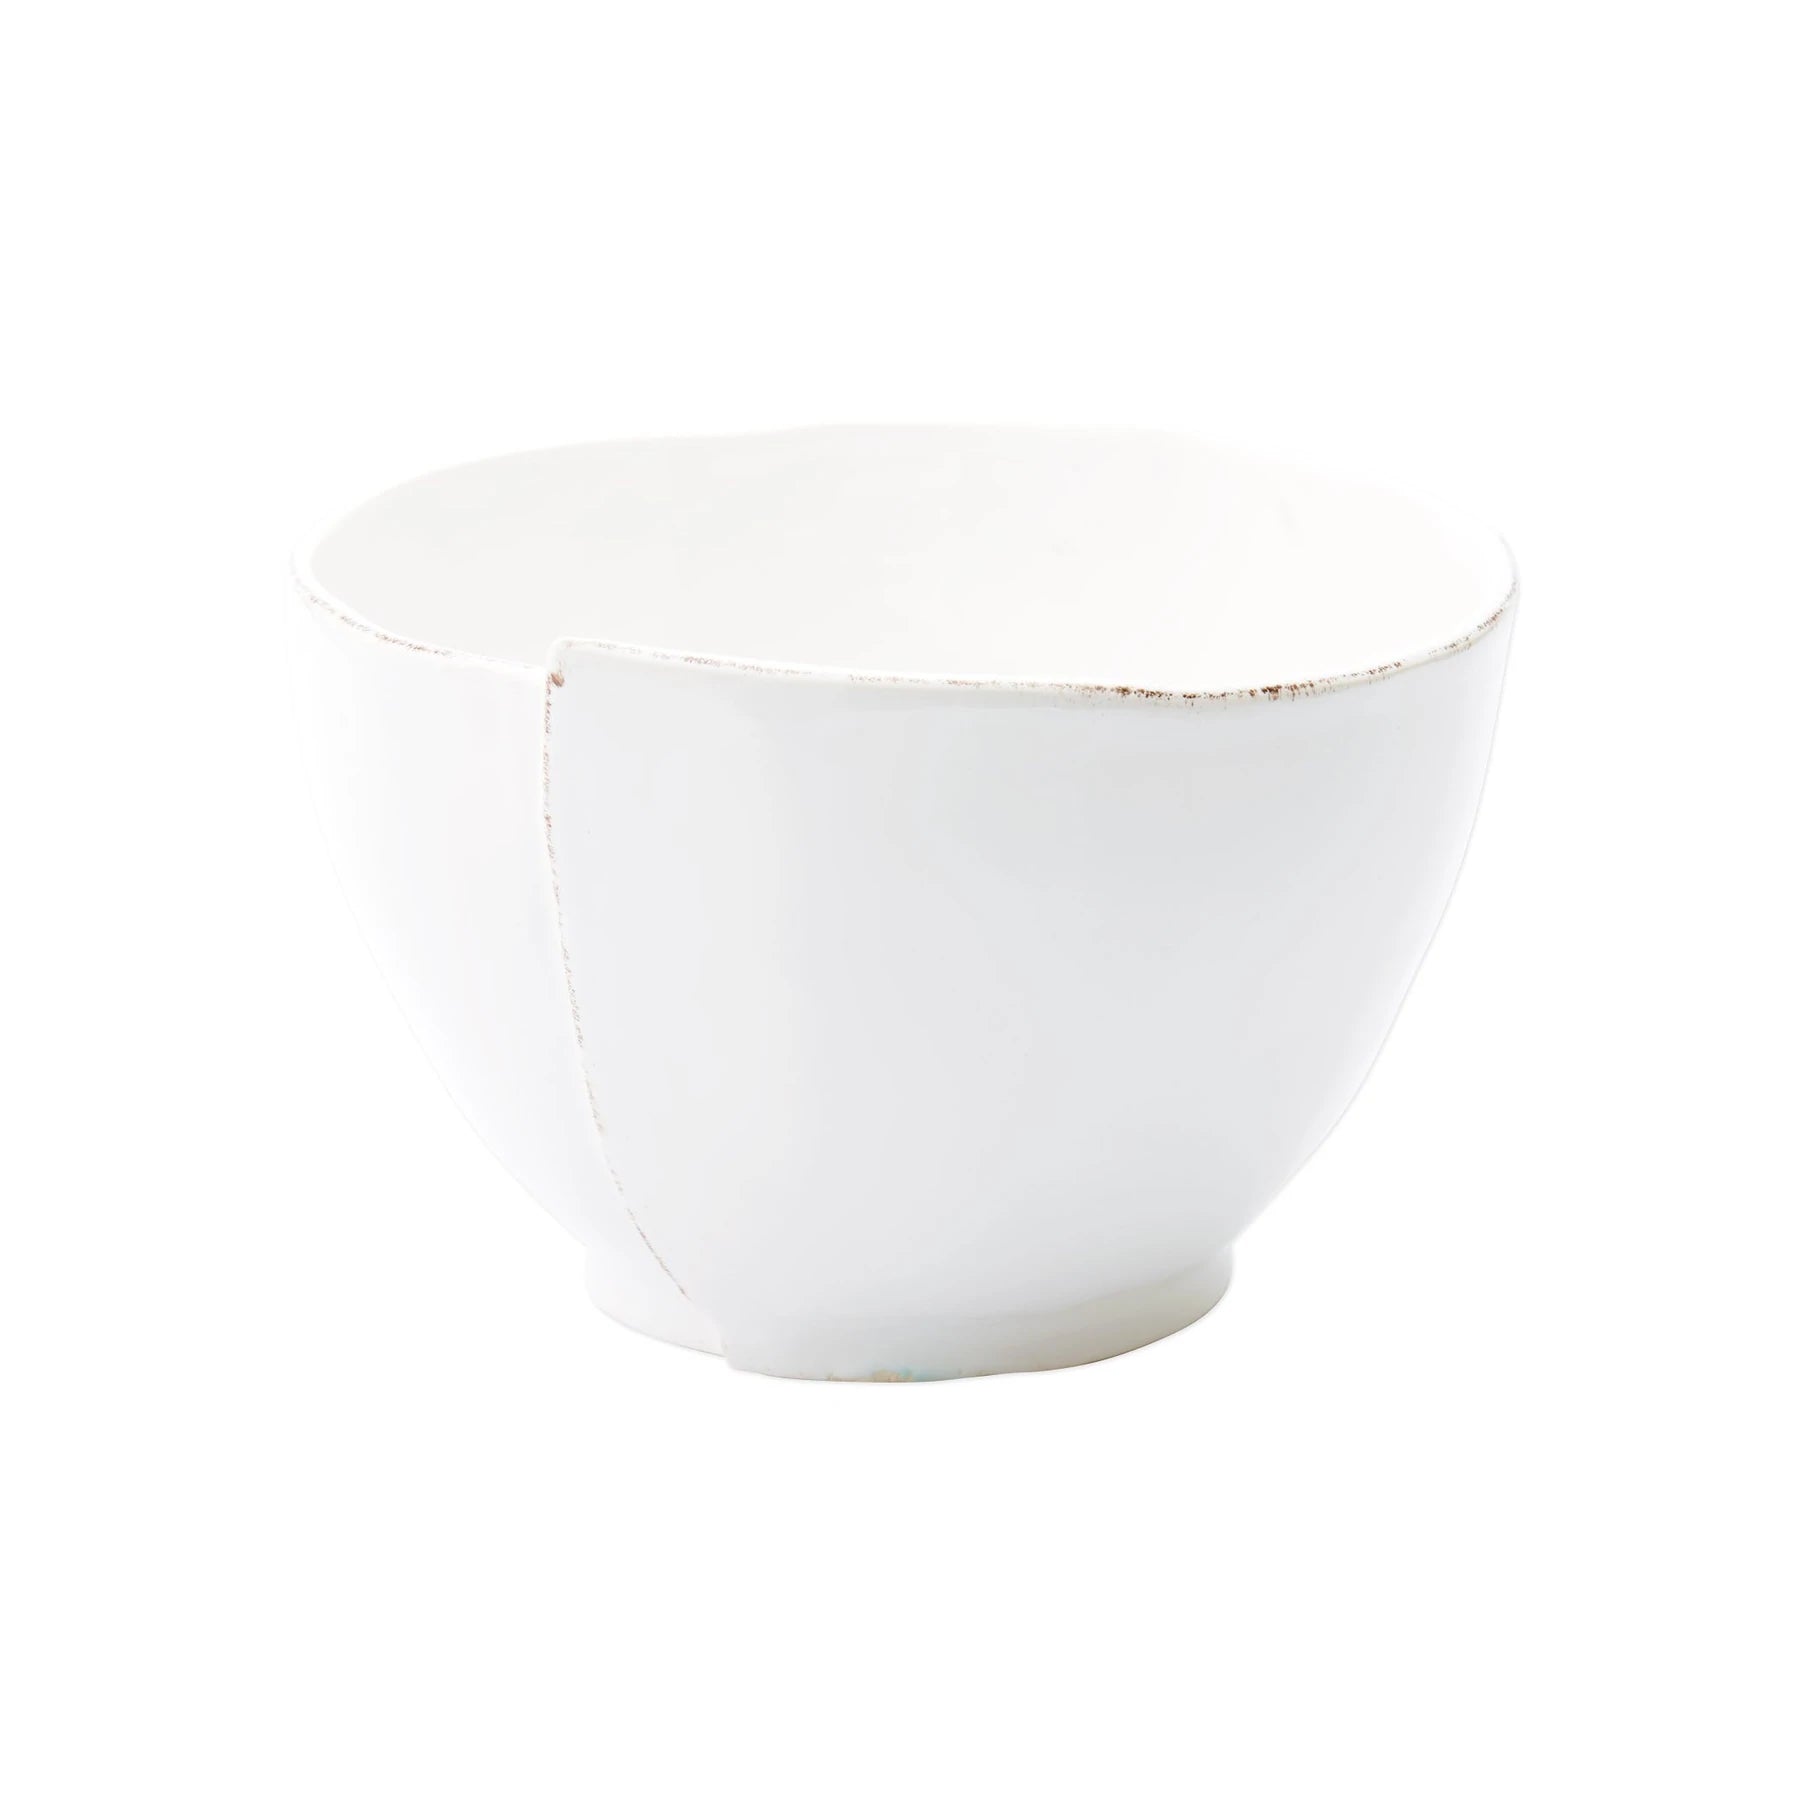 Lastra White 4-Piece Serving Bowls Set